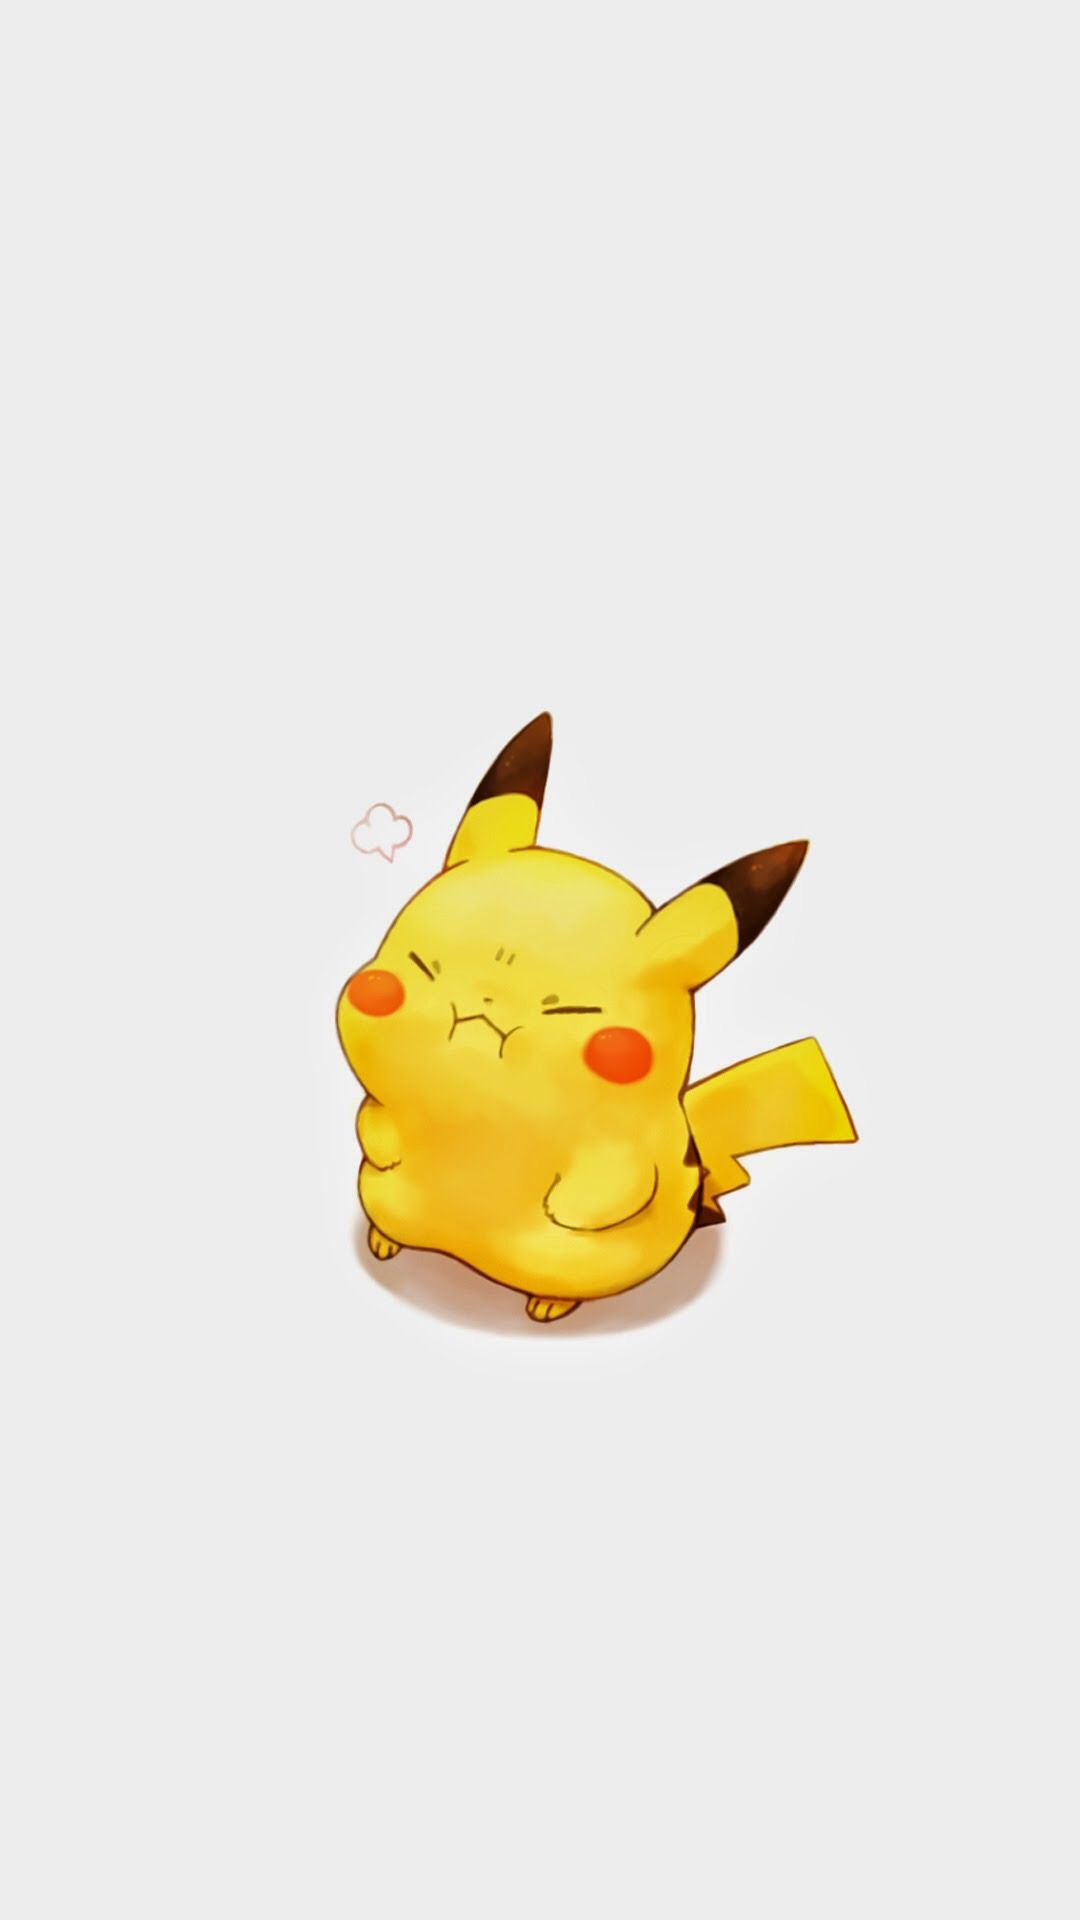 Pikachu Cute Wallpapers